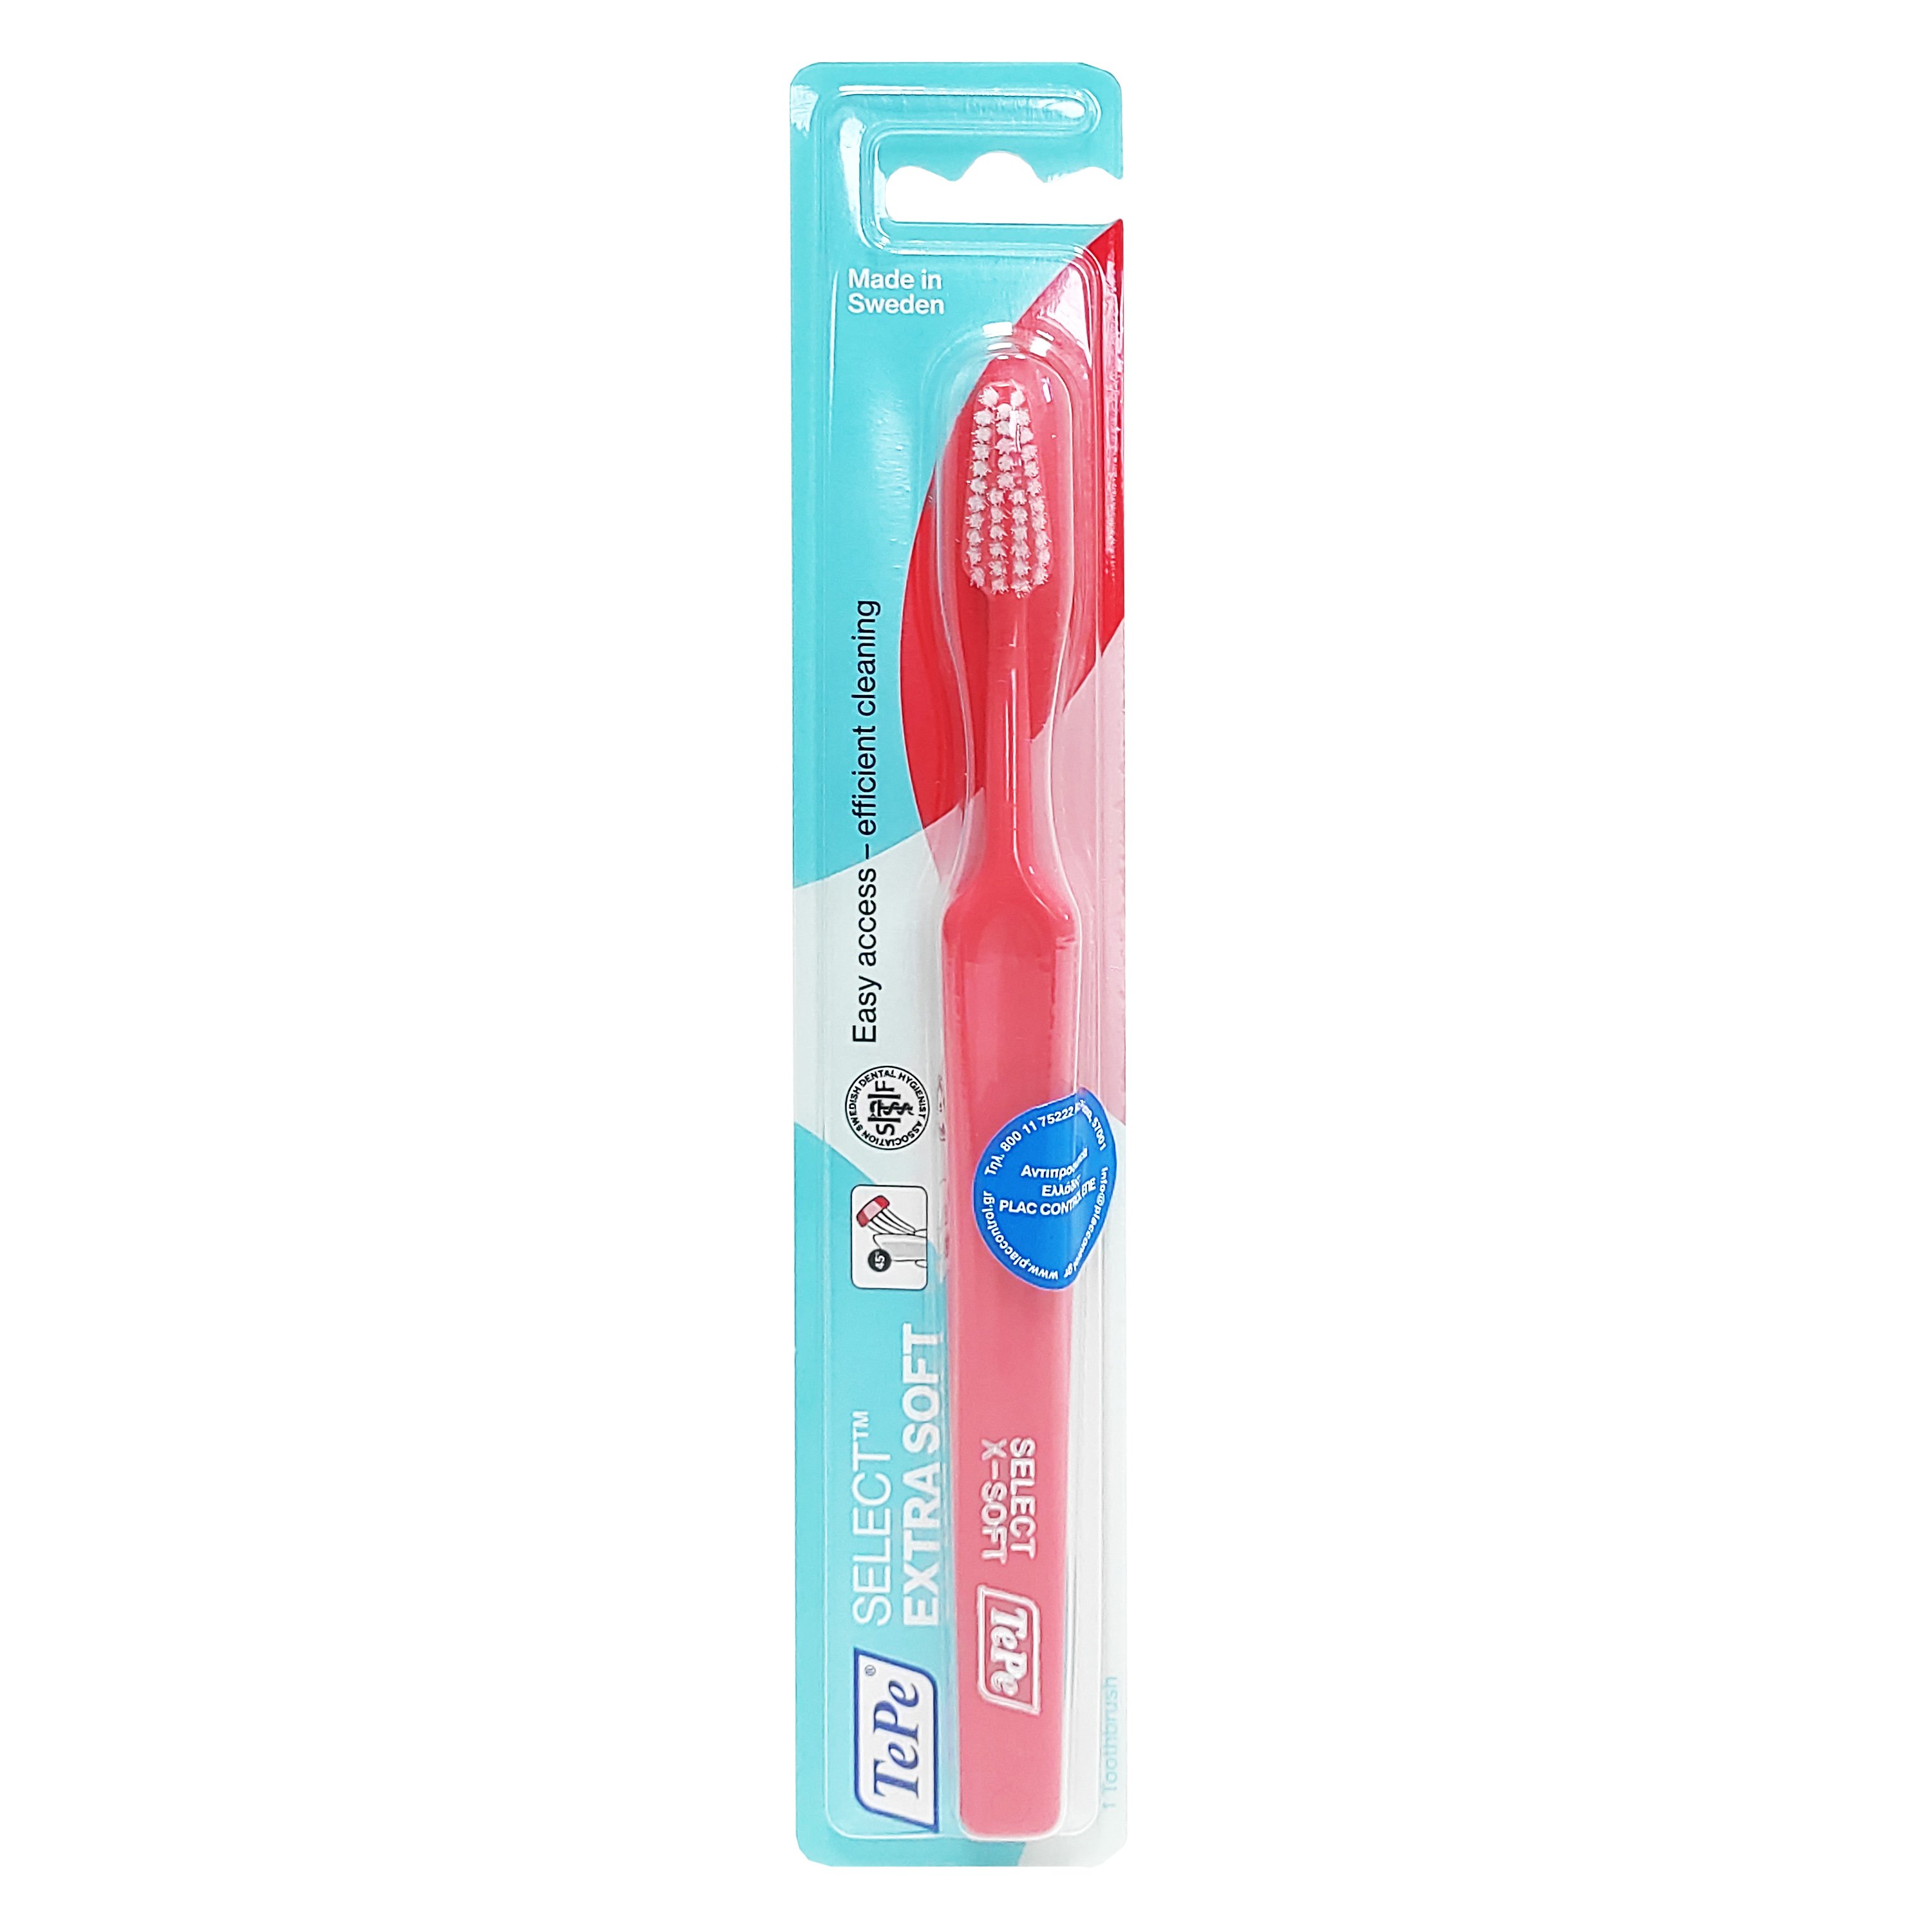 Tepe Select Extra Soft Οδοντόβουρτσα Πολύ Μαλακή για Αποτελεσματικό Καθαρισμό & Προστασία των Ούλων 1 Τεμάχιο – κόκκινο